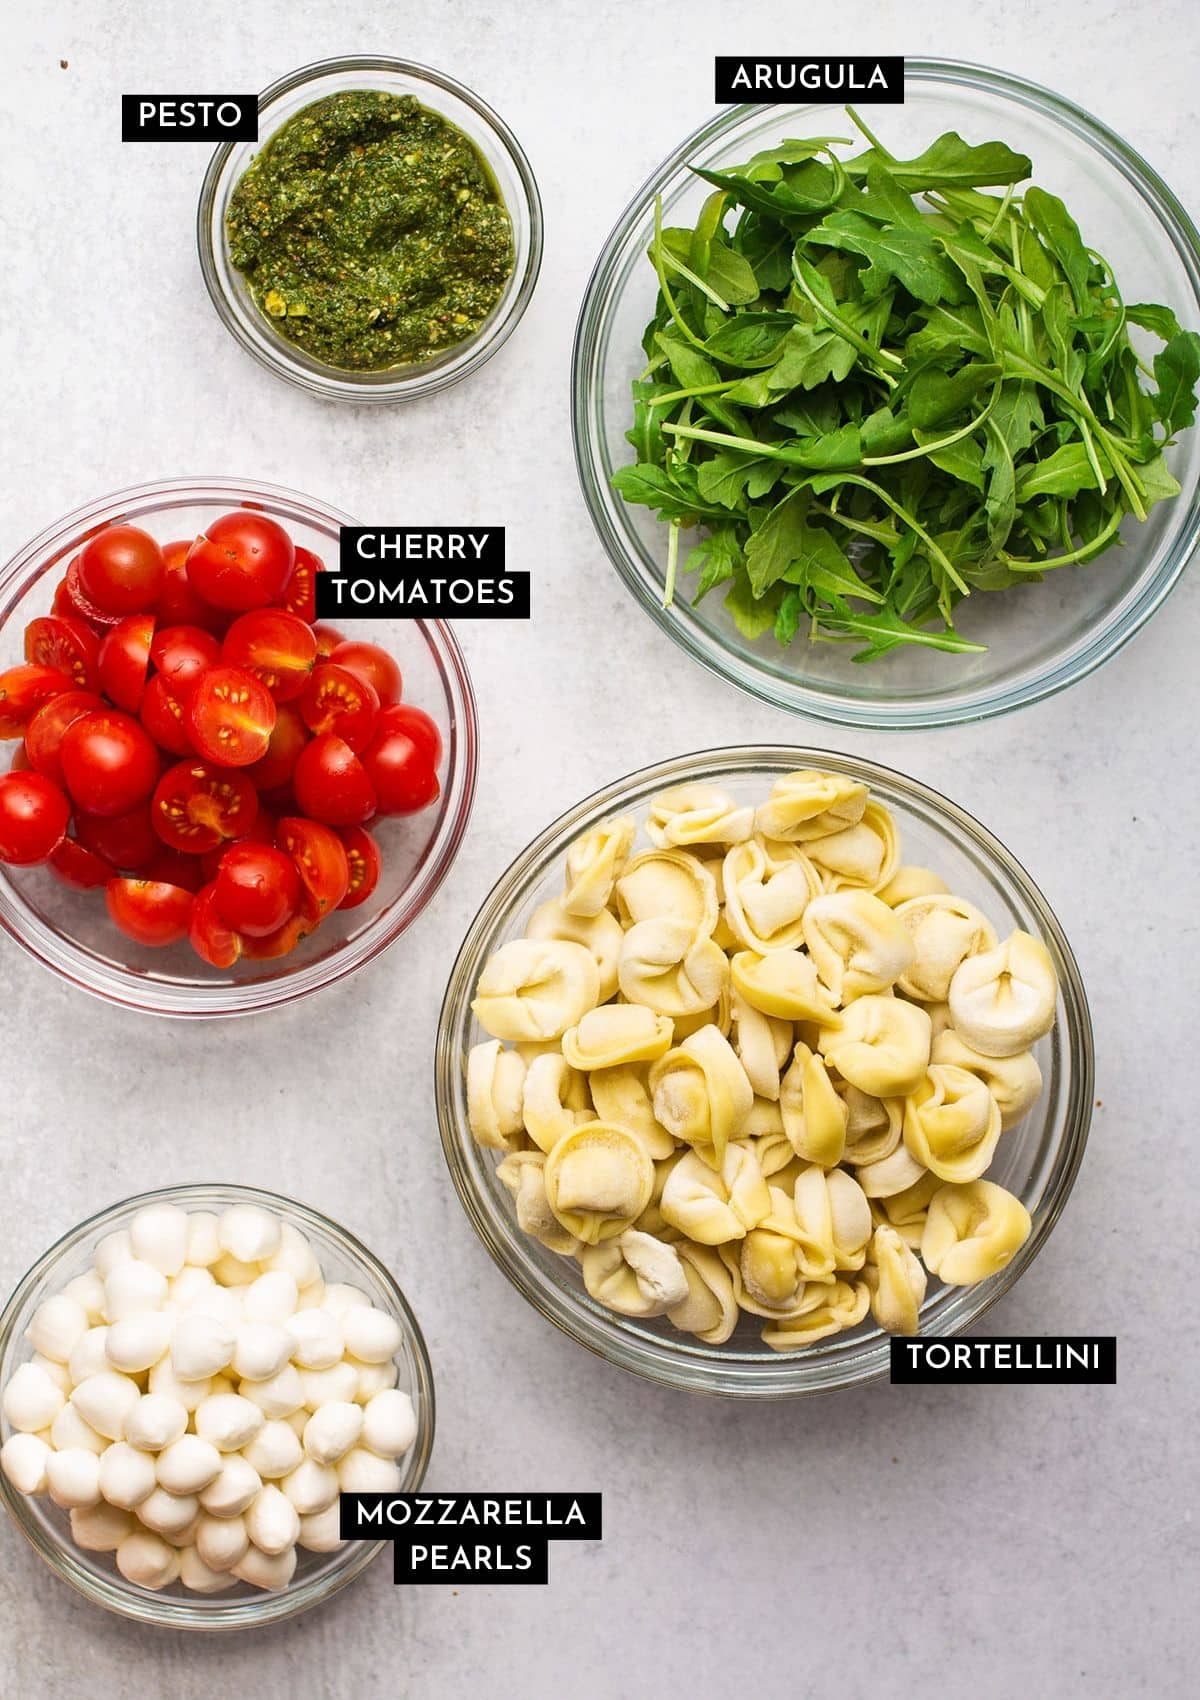 Tortellini salad ingredients.